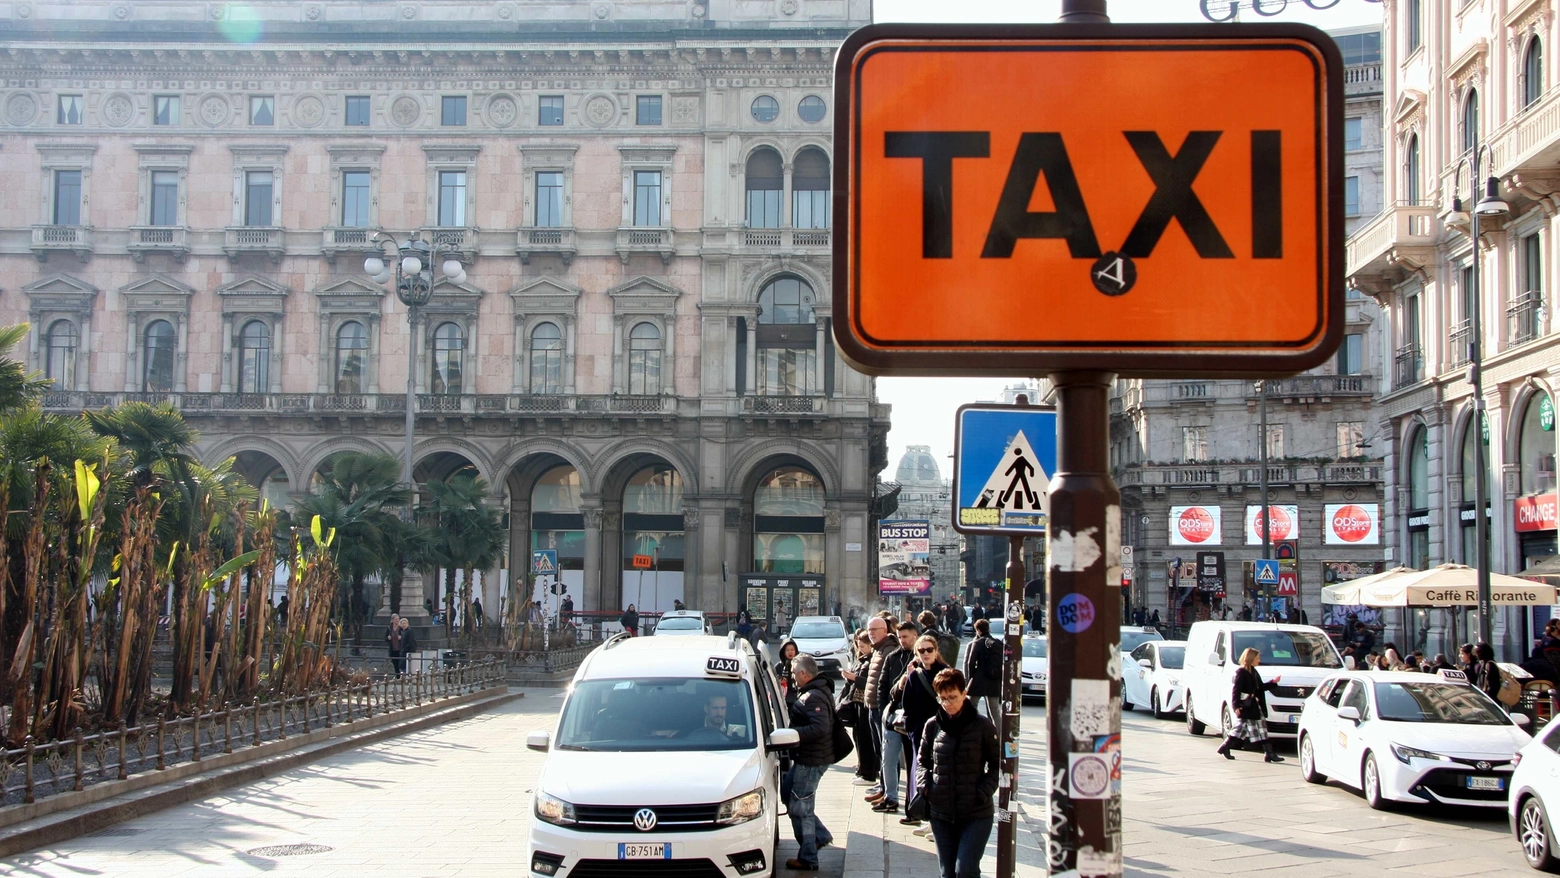 In arrivo 450 nuove licenze taxi a Milano